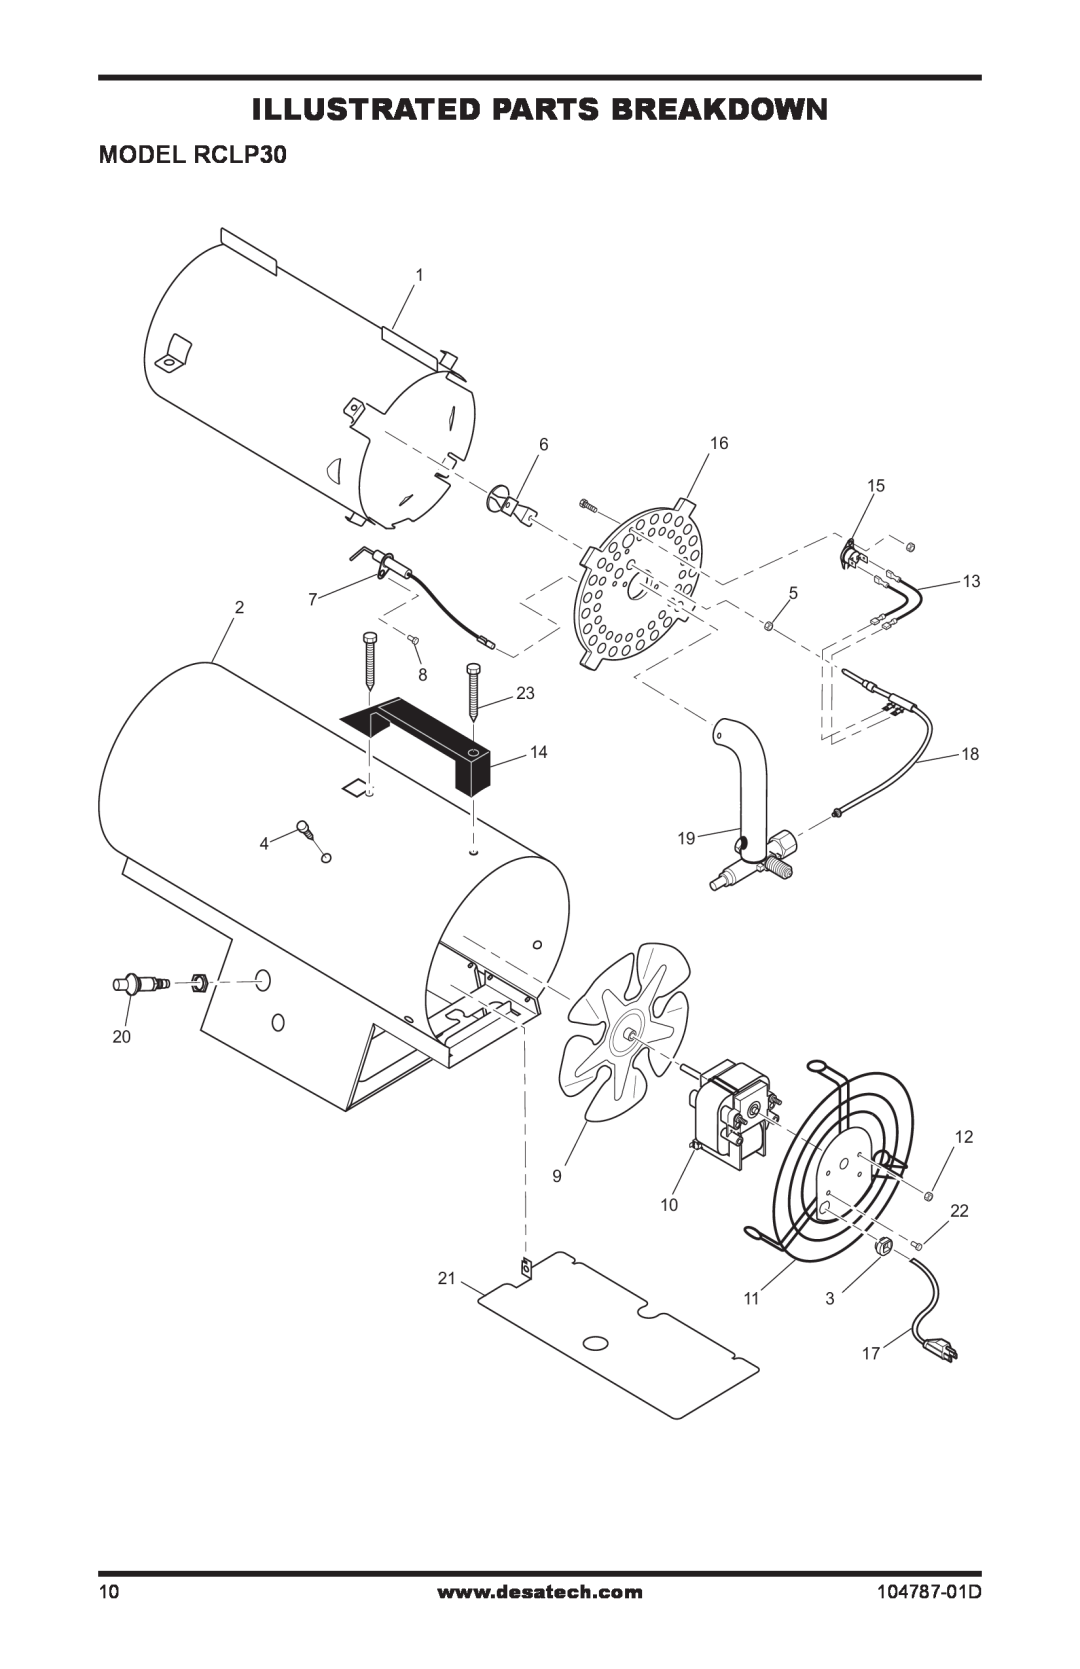 Desa owner manual Illustrated Parts Breakdown, MODEL RCLP30, 104787-01D 